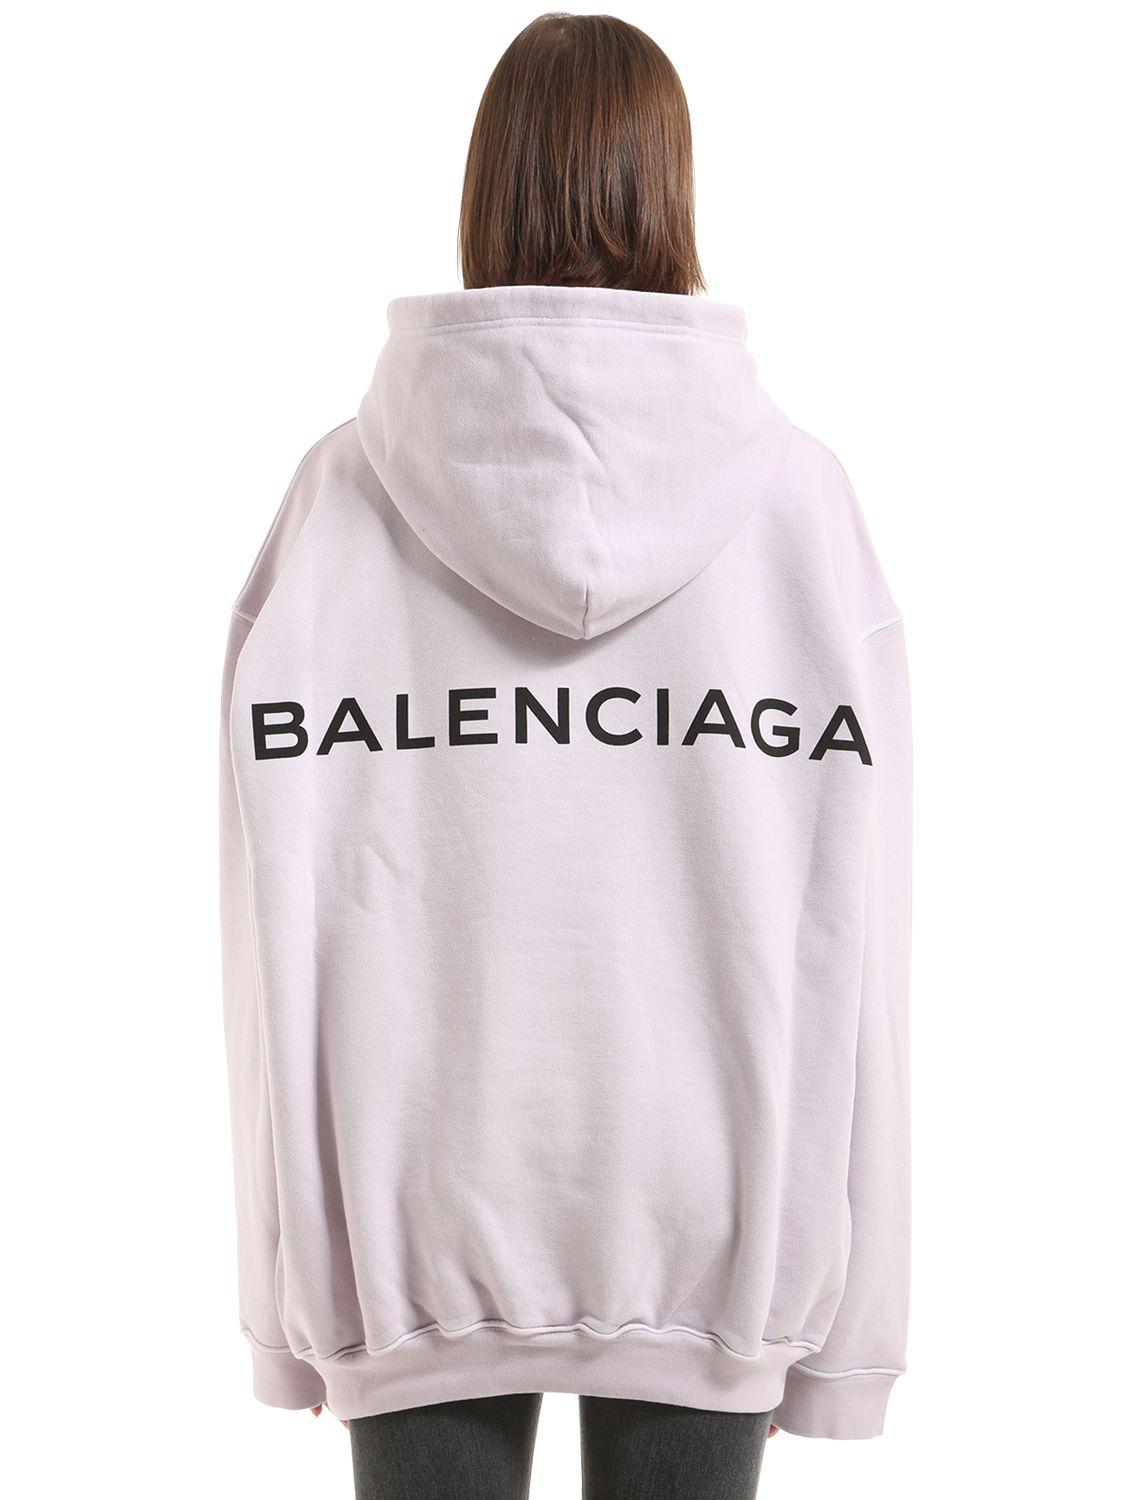 balenciaga hoodie with phone pocket